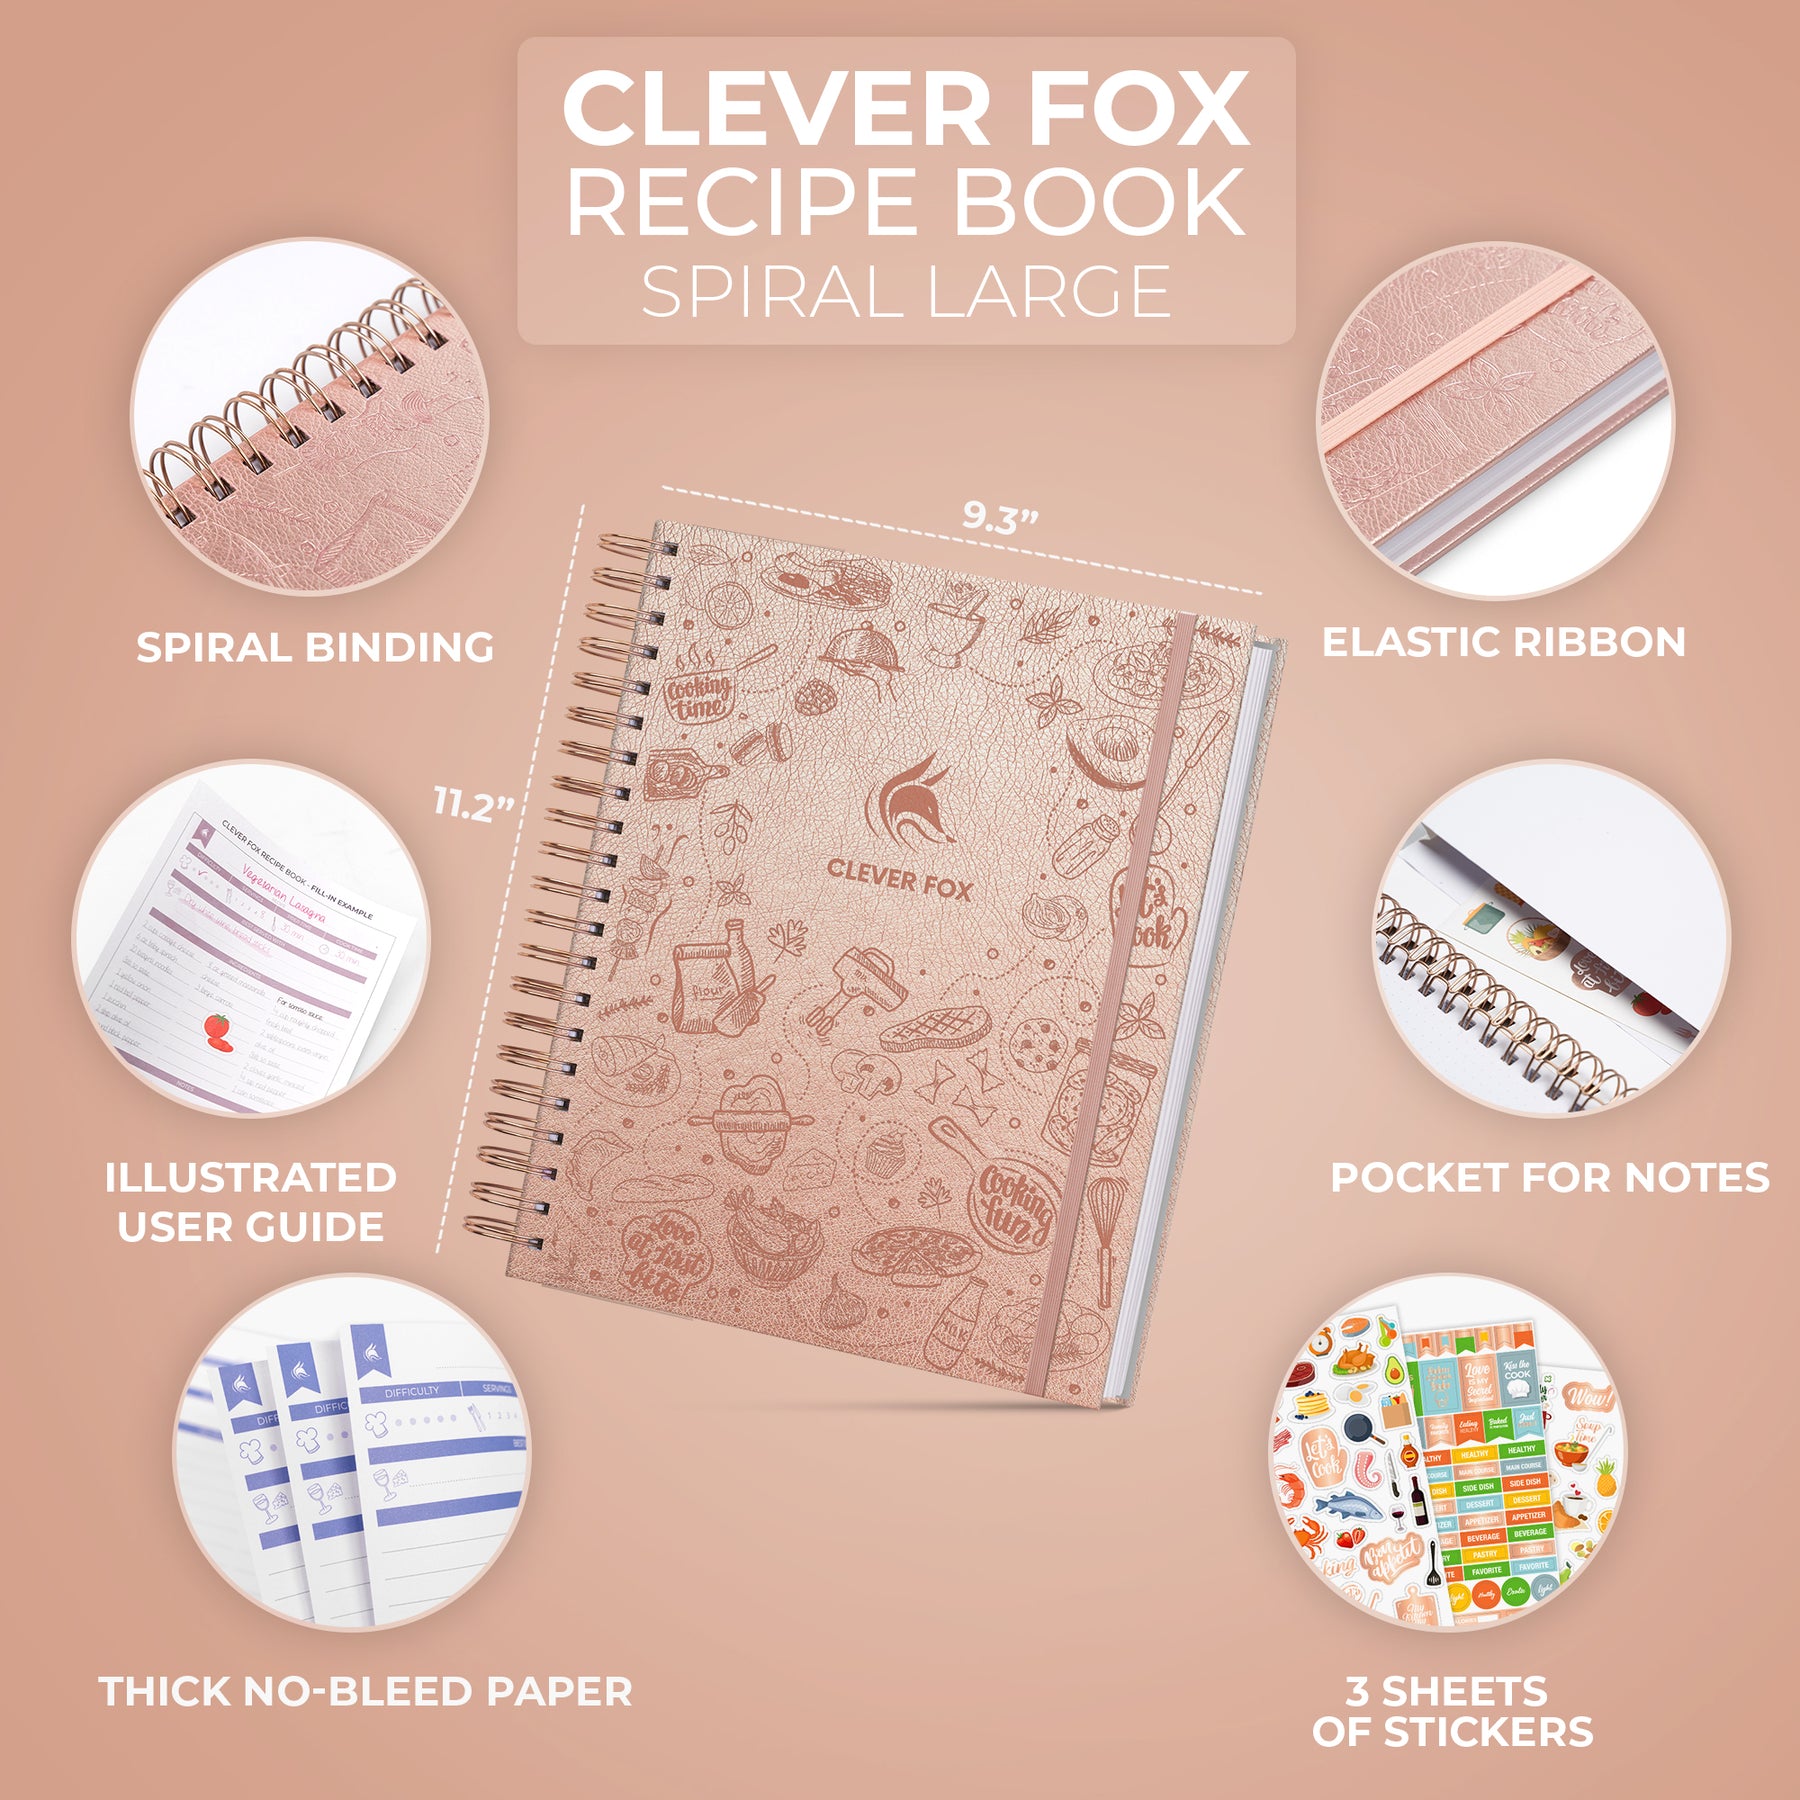  Clever Fox Recipe Book SpiralMake Your Own Family